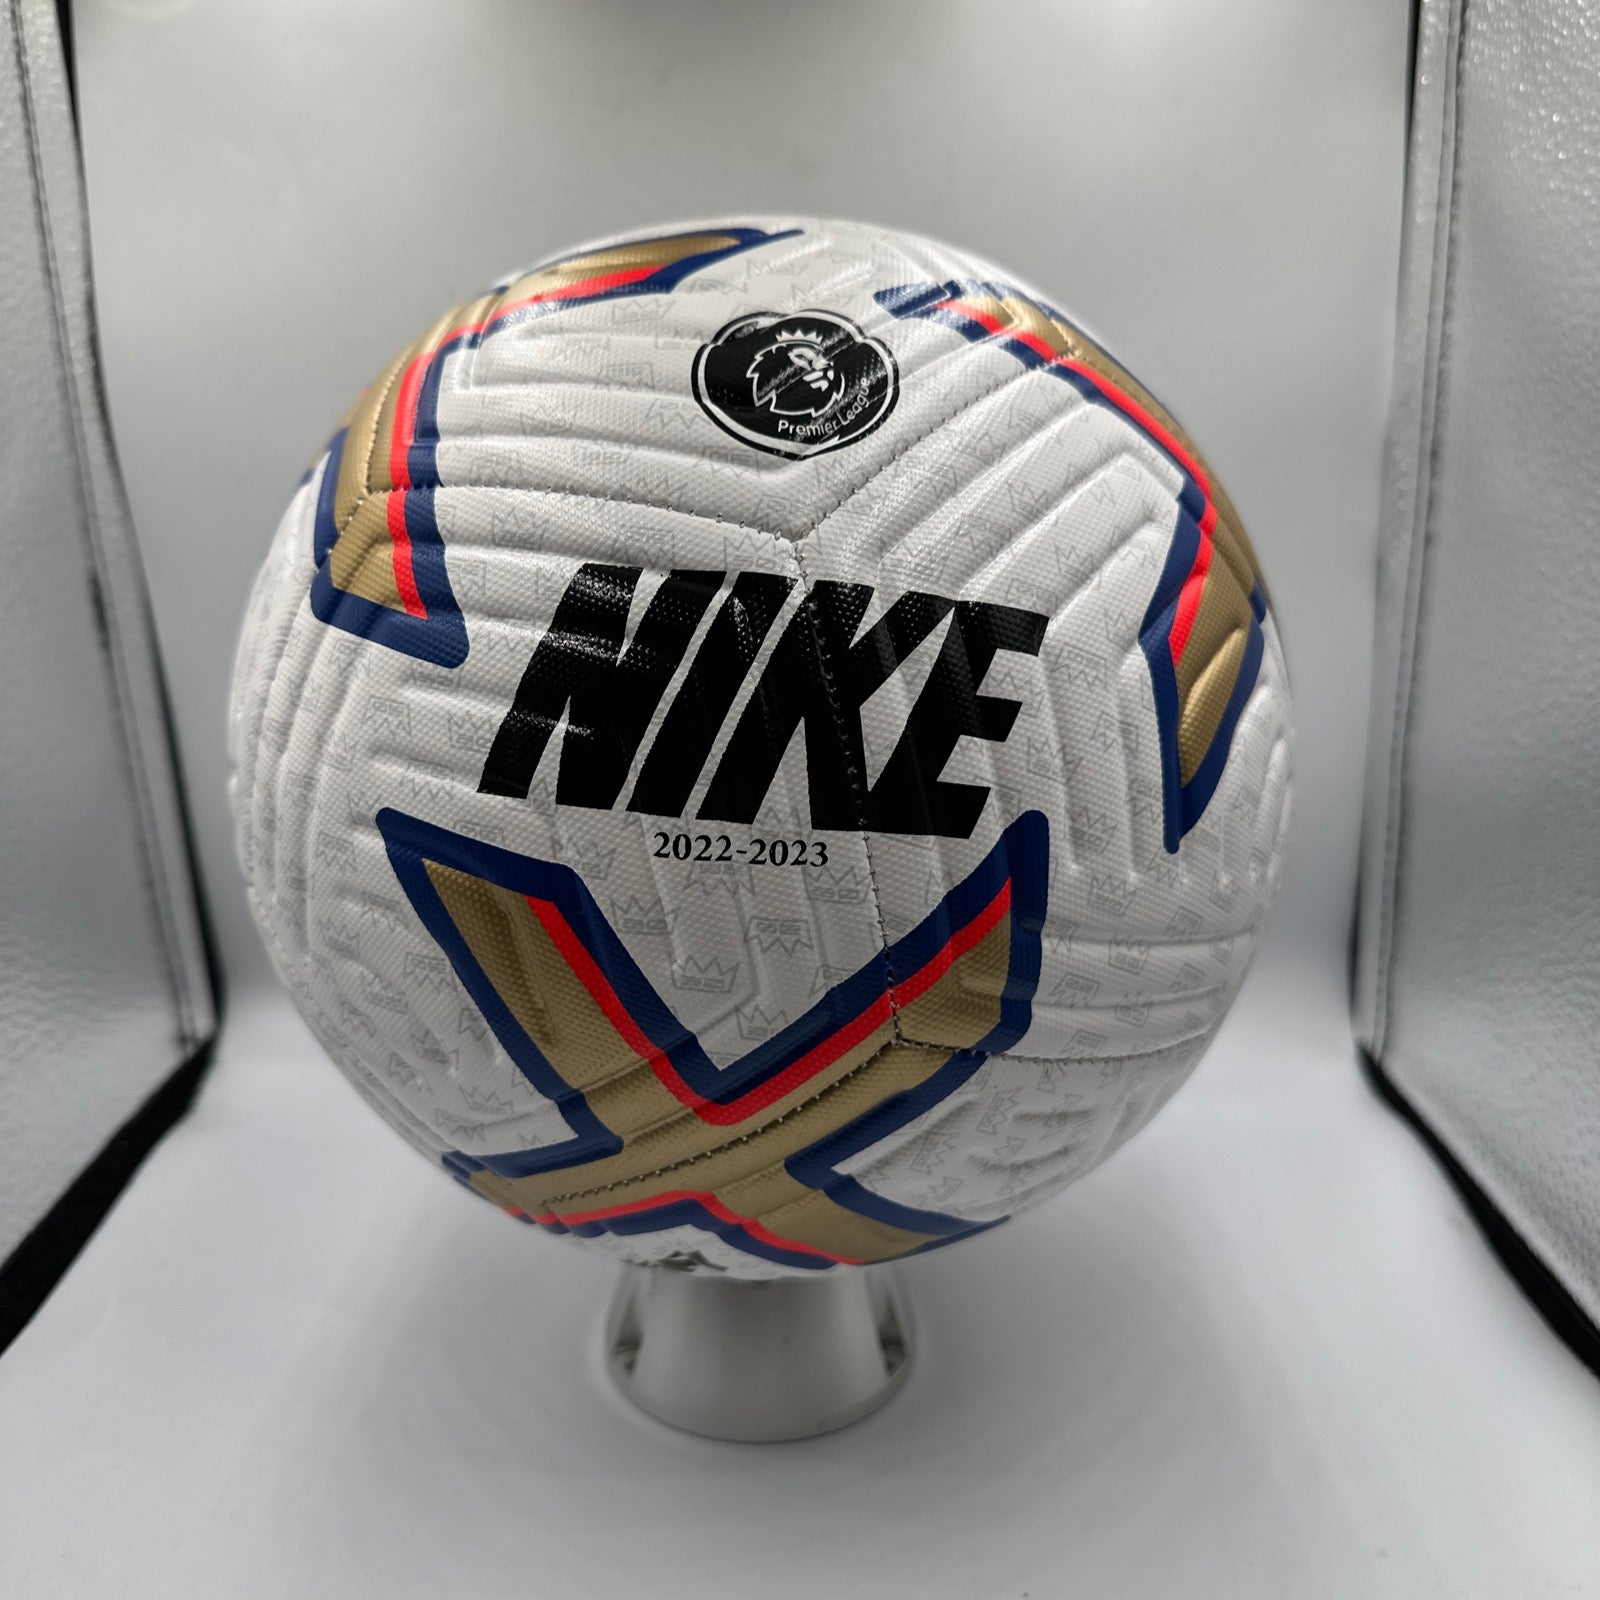 Tercer balón Nike Flight Premier League 2022/23